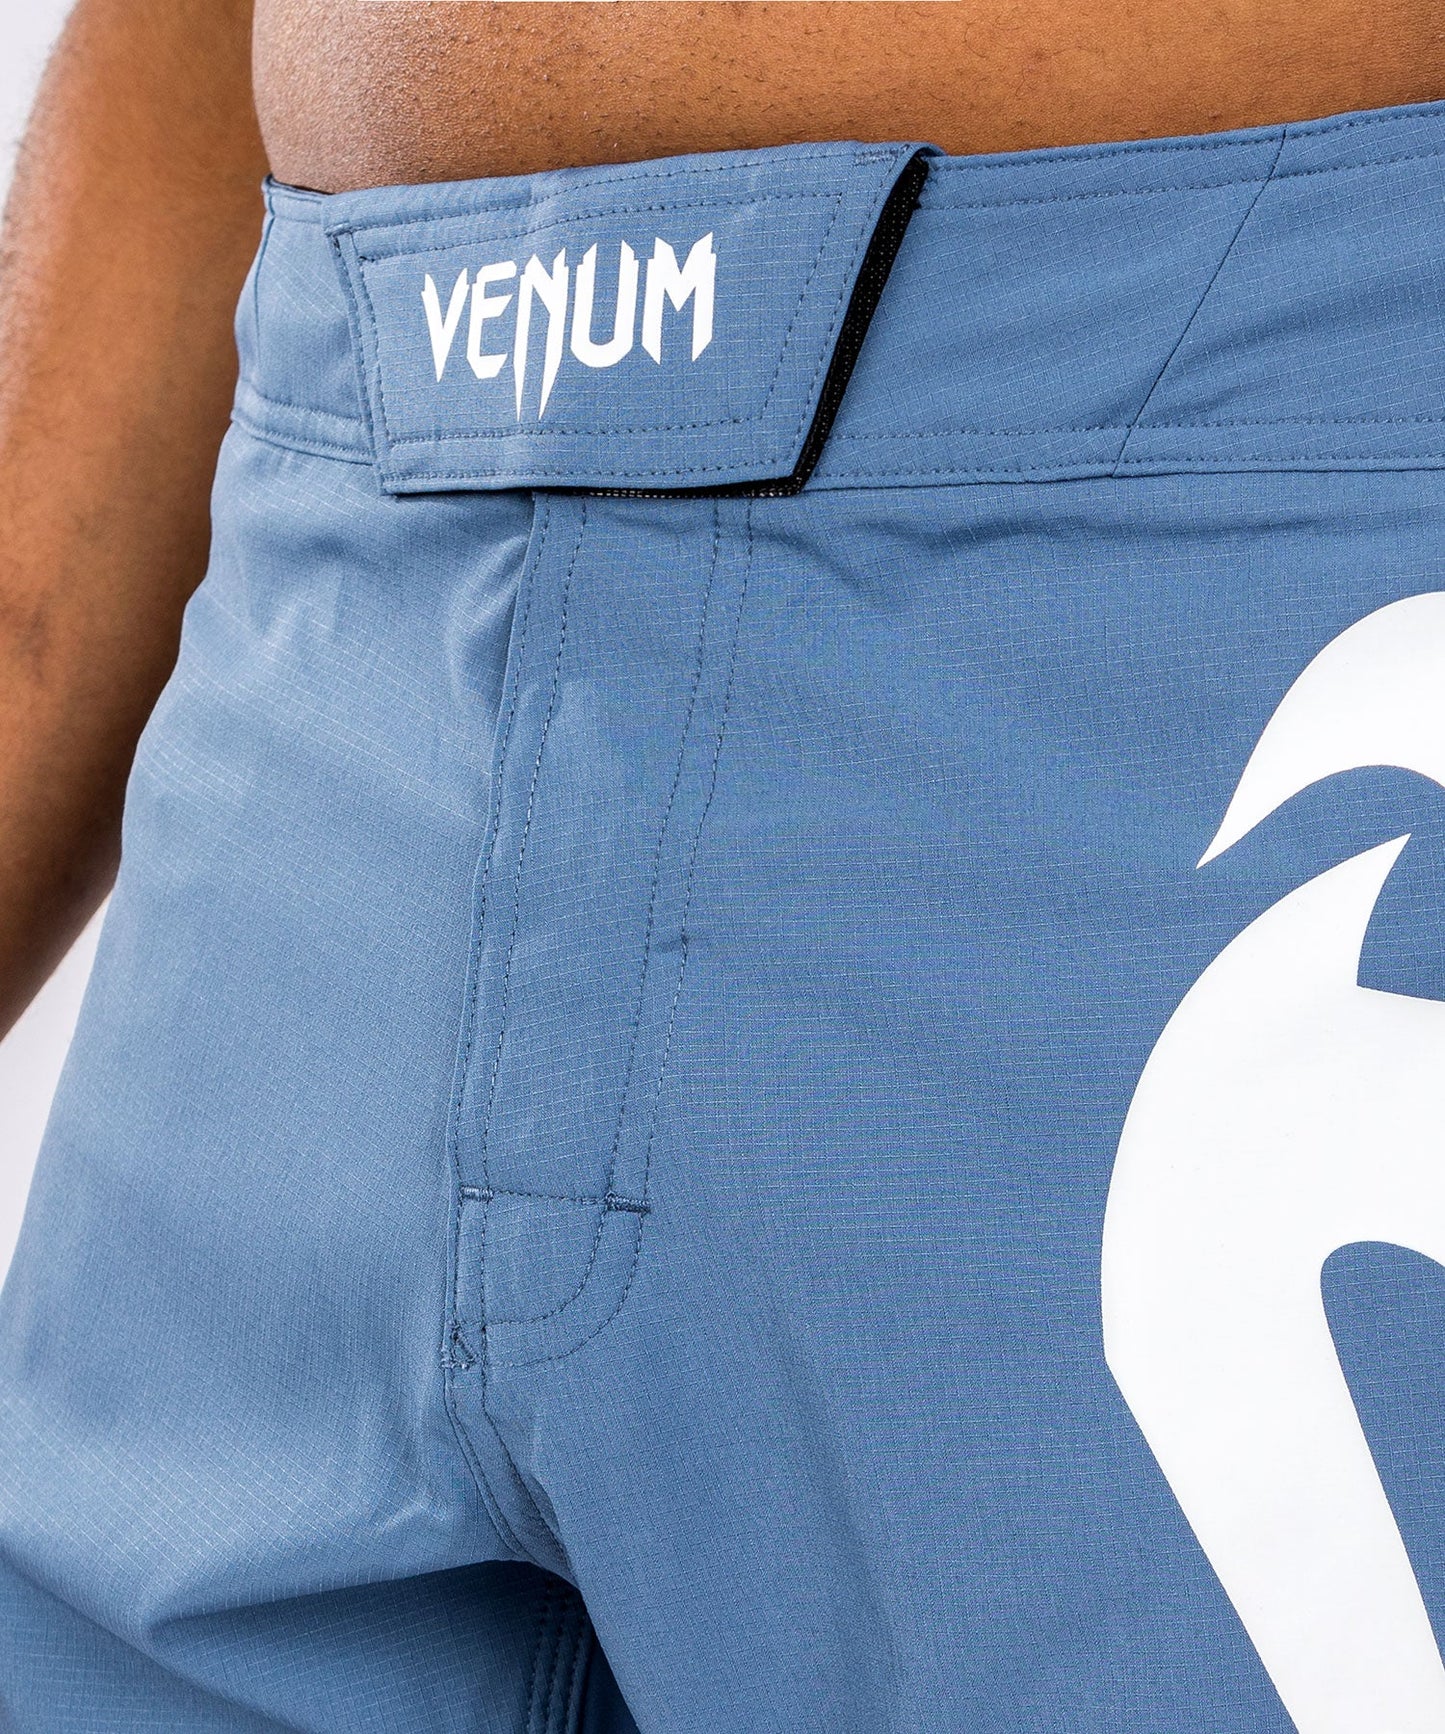 Venum Light 5.0 Fight Shorts - Blau/Weiß